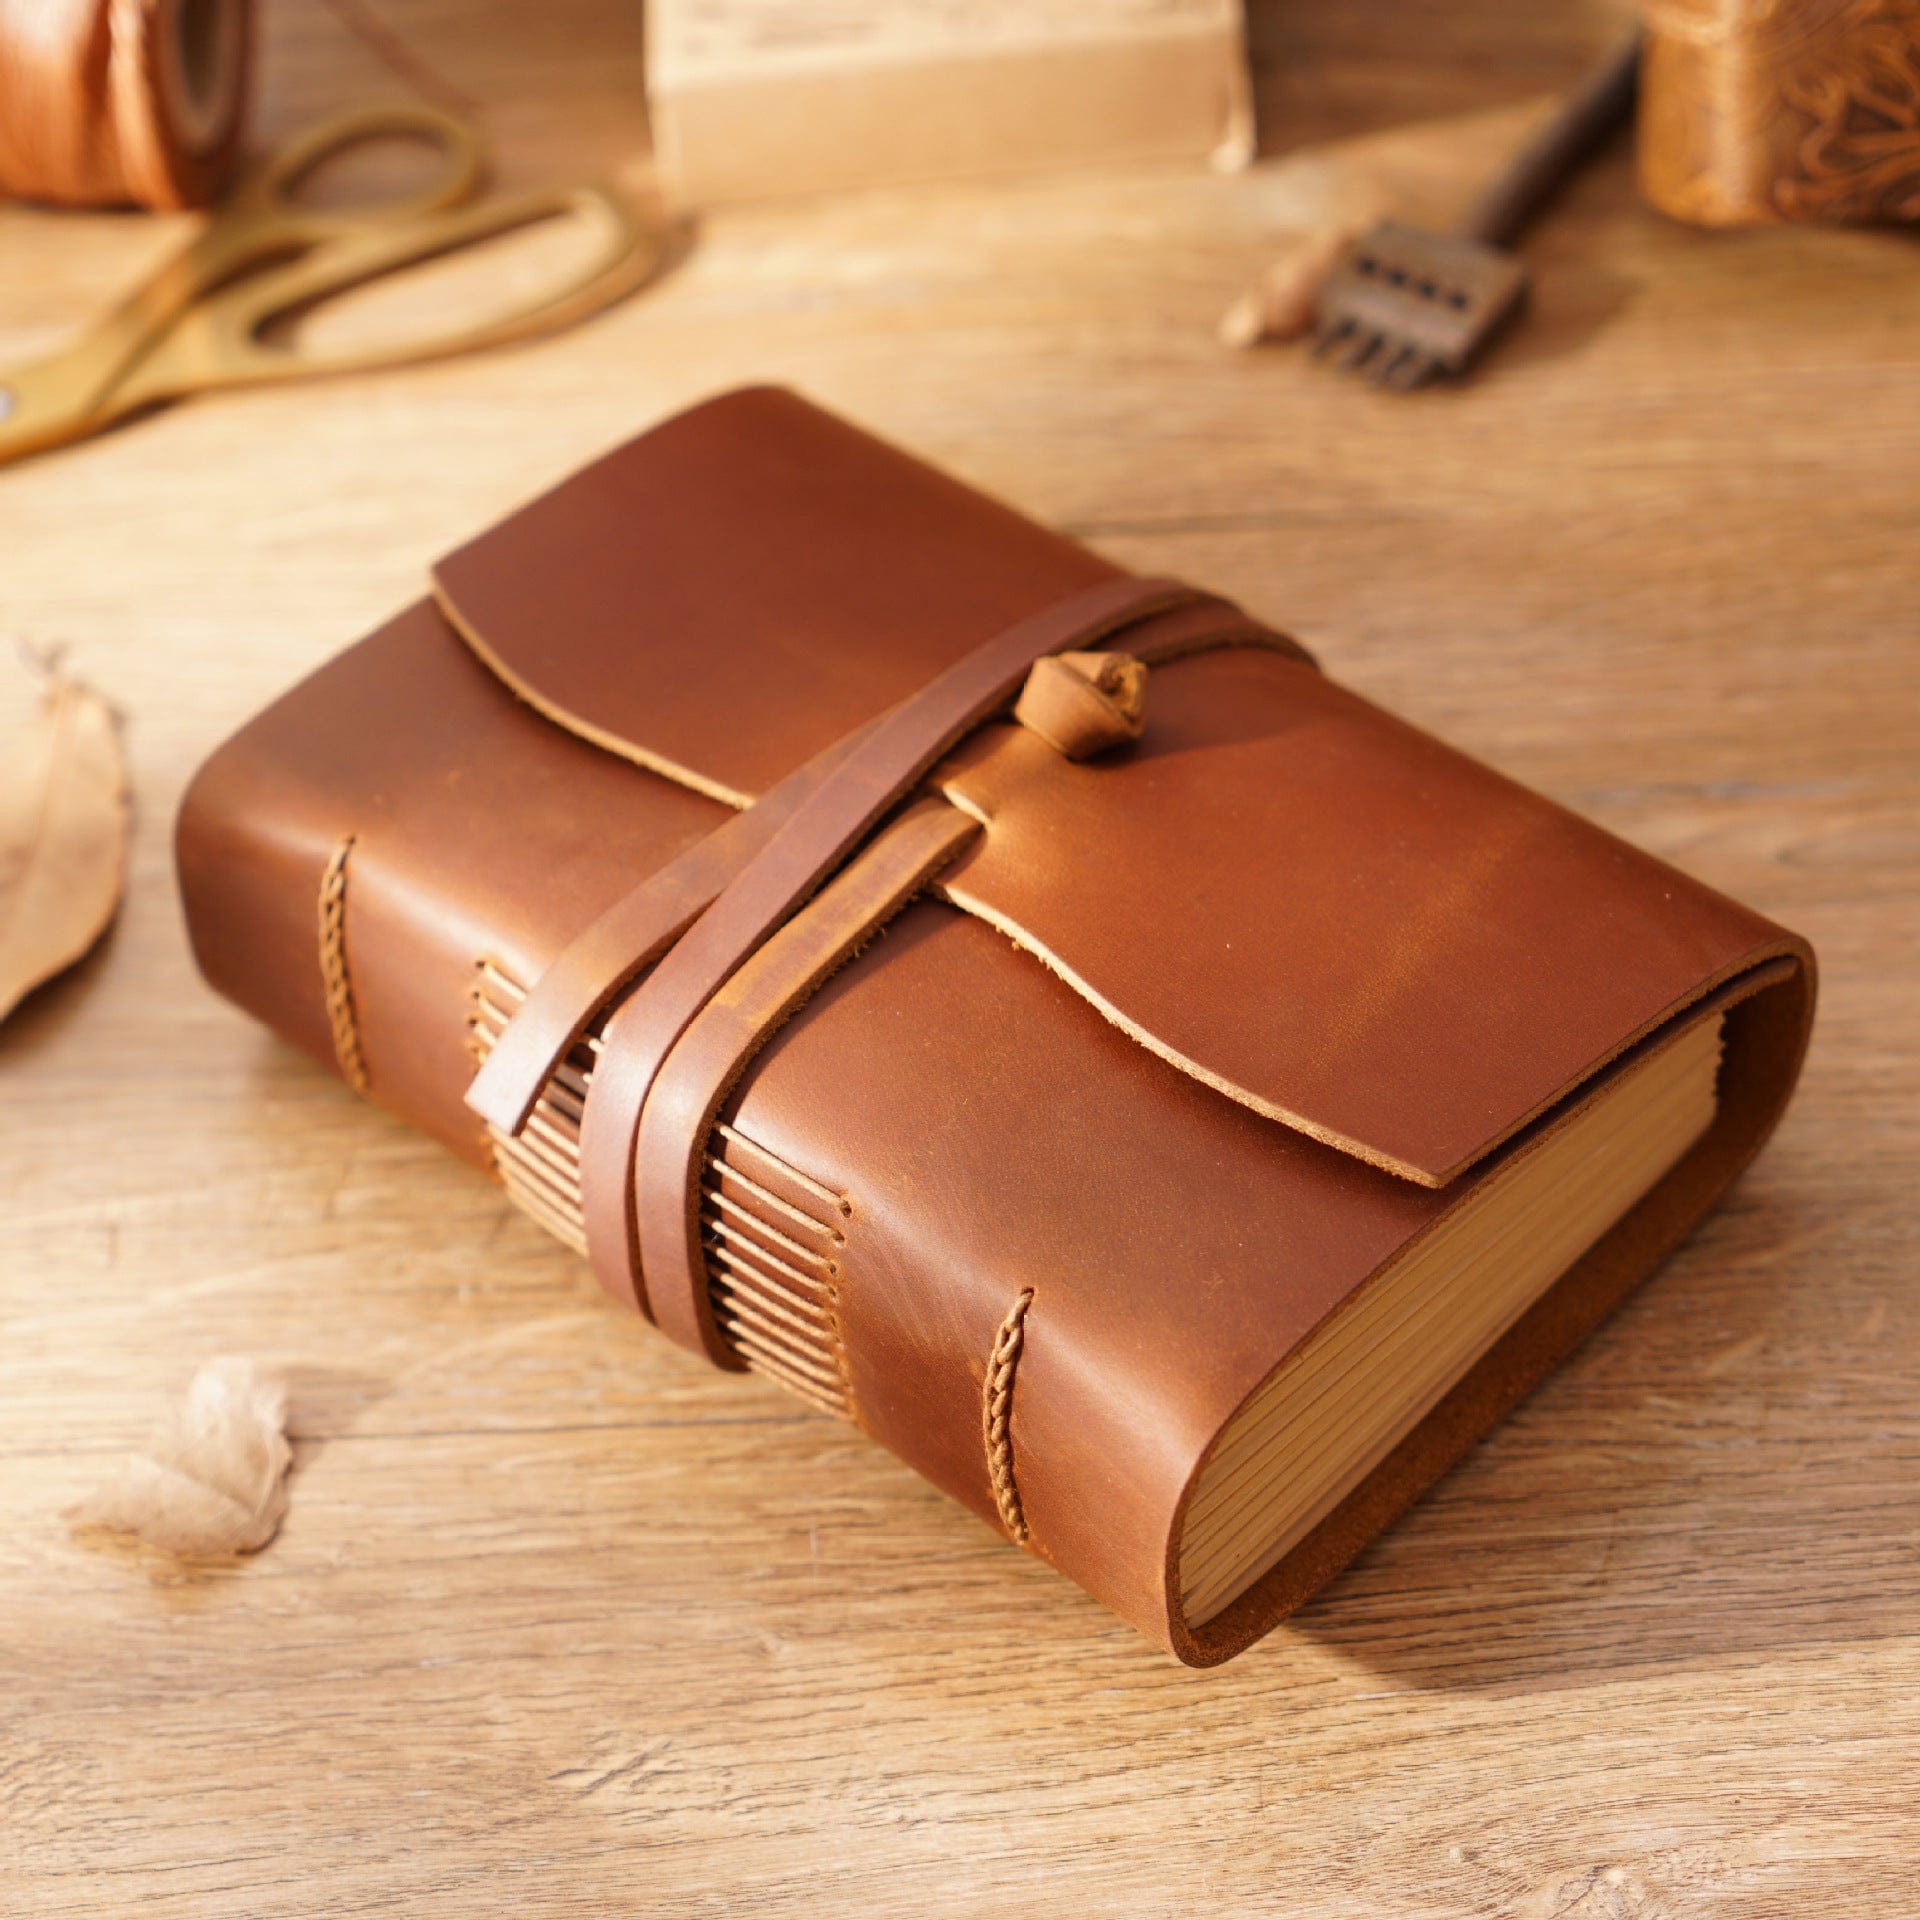 World Travel Journal, Genuine Calfskin Leather, 6, Green